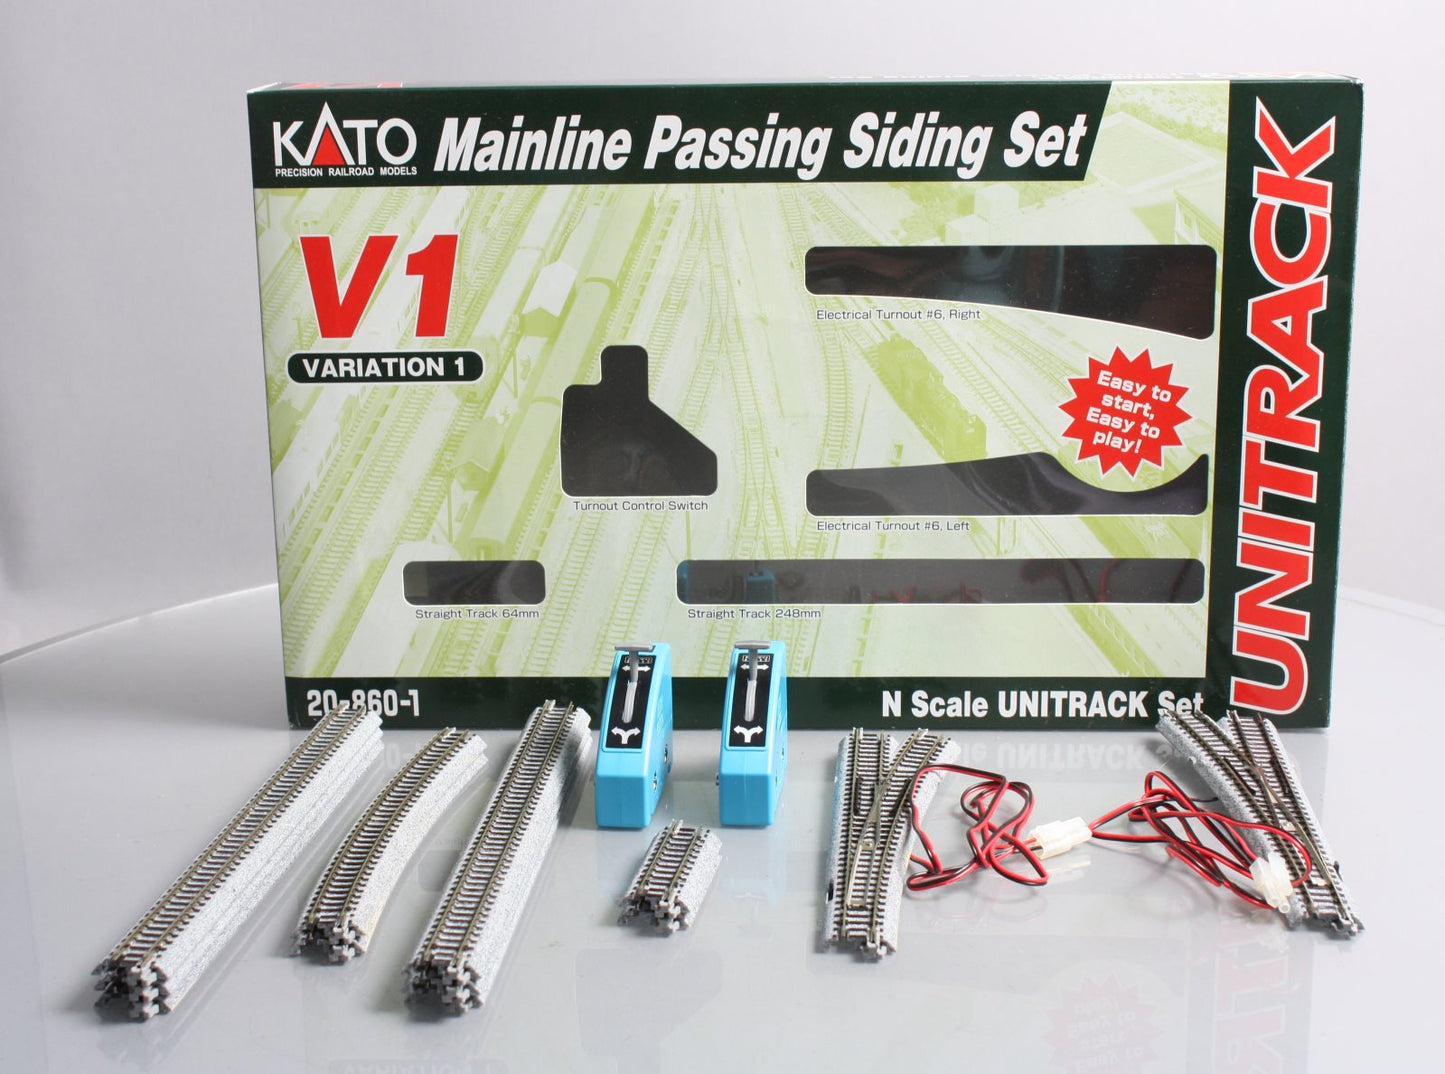 Kato 20-860-1 N Scale Unitrack Starter Set V1